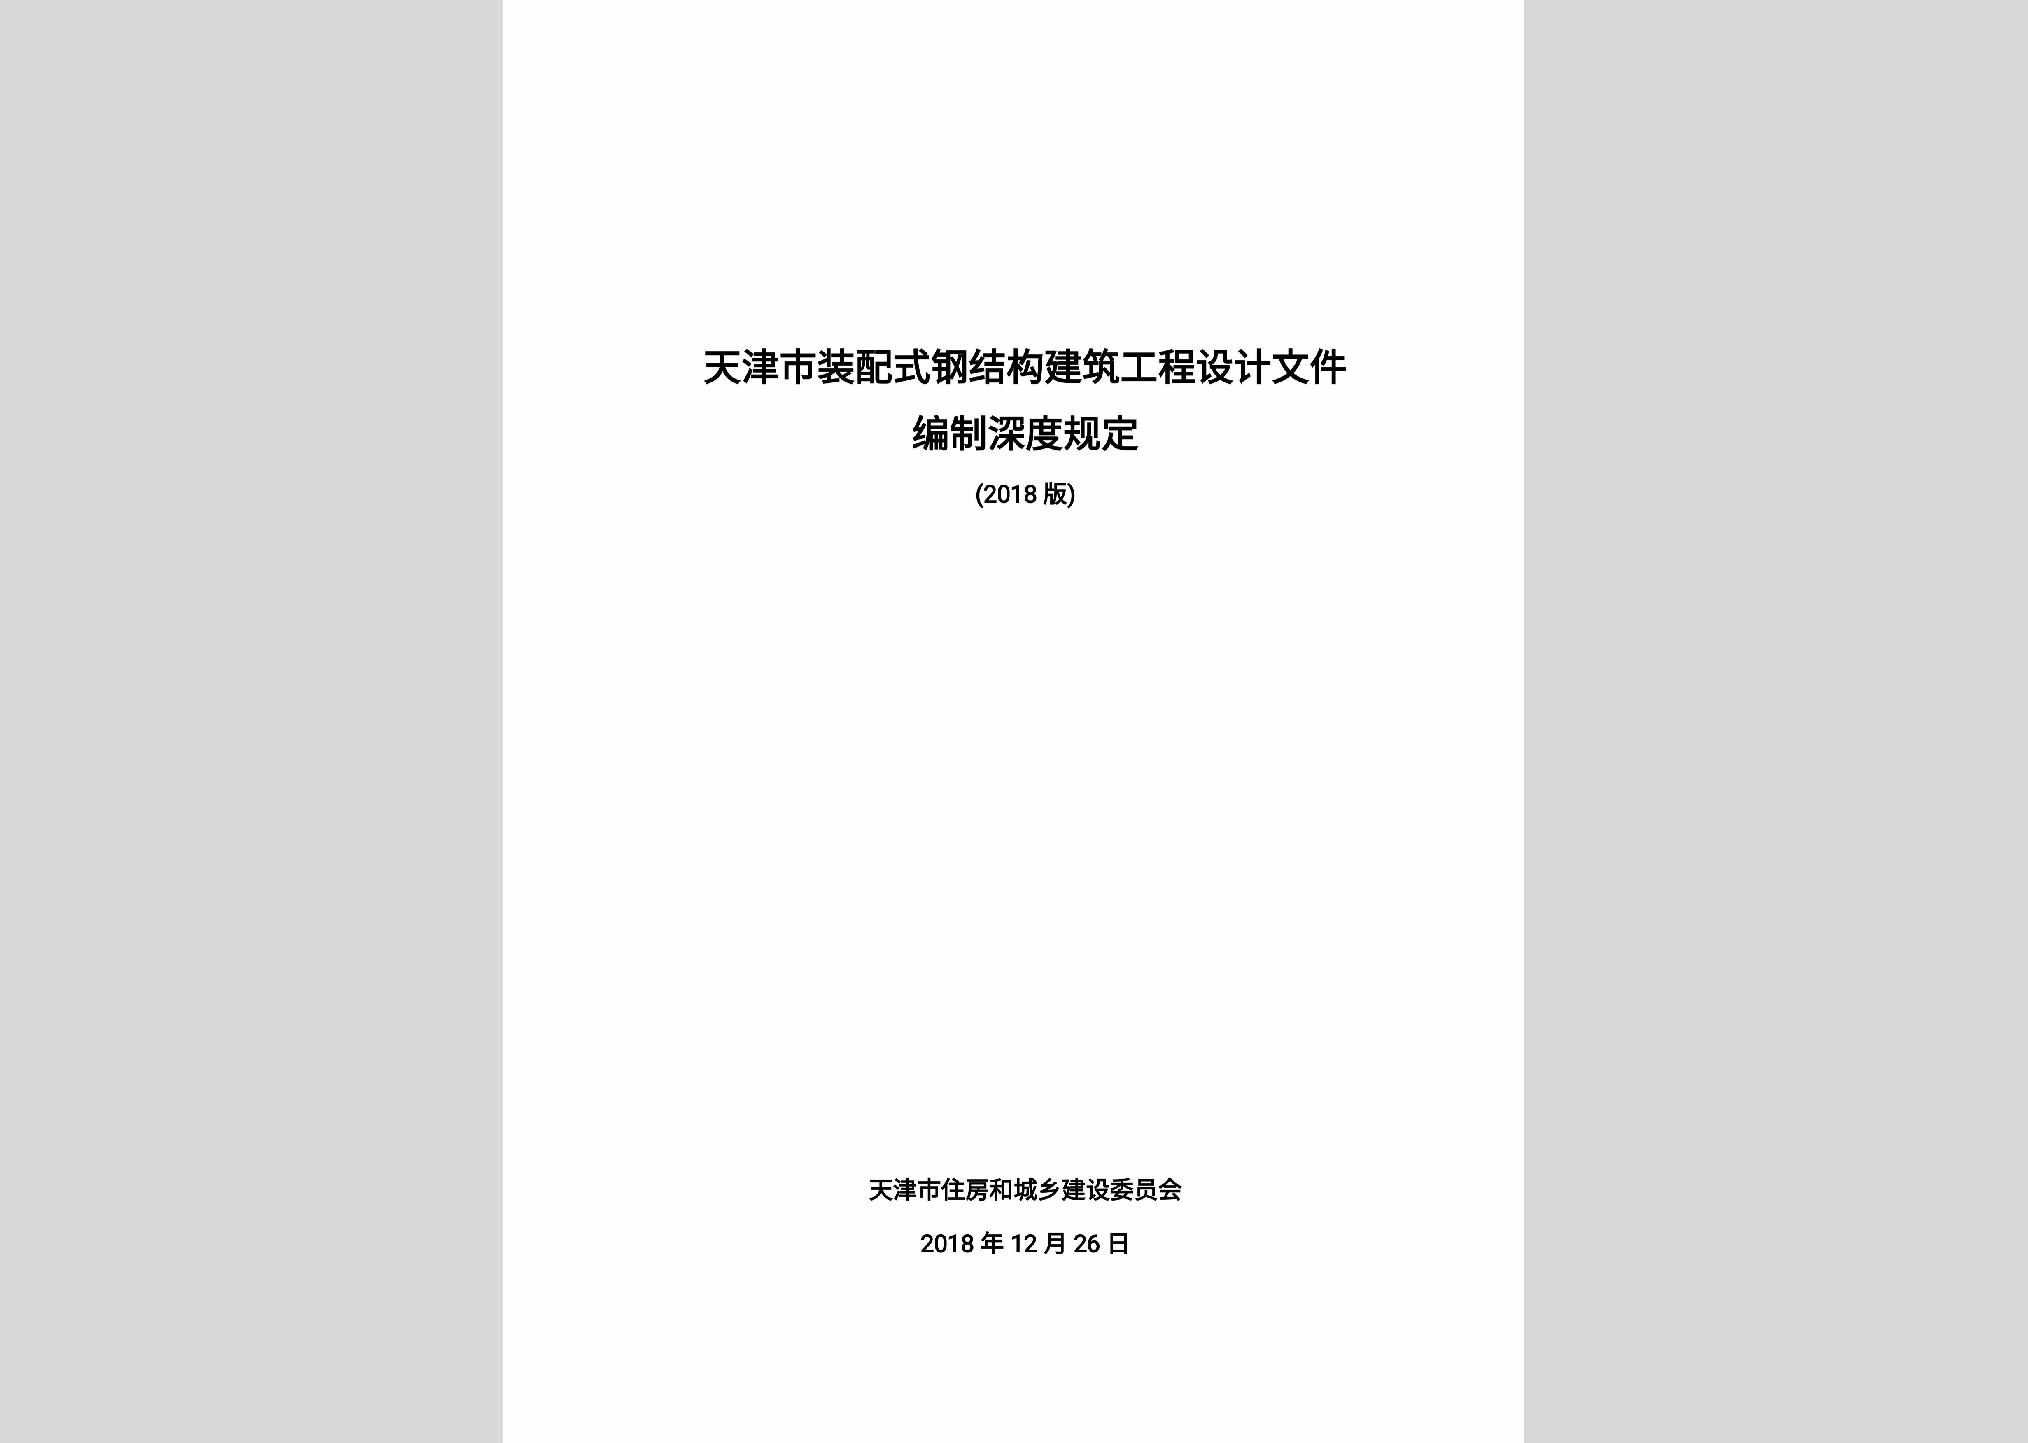 TJ-ZPSGJGJZ-2018：天津市装配式钢结构建筑工程设计文件编制深度规定（2018版）